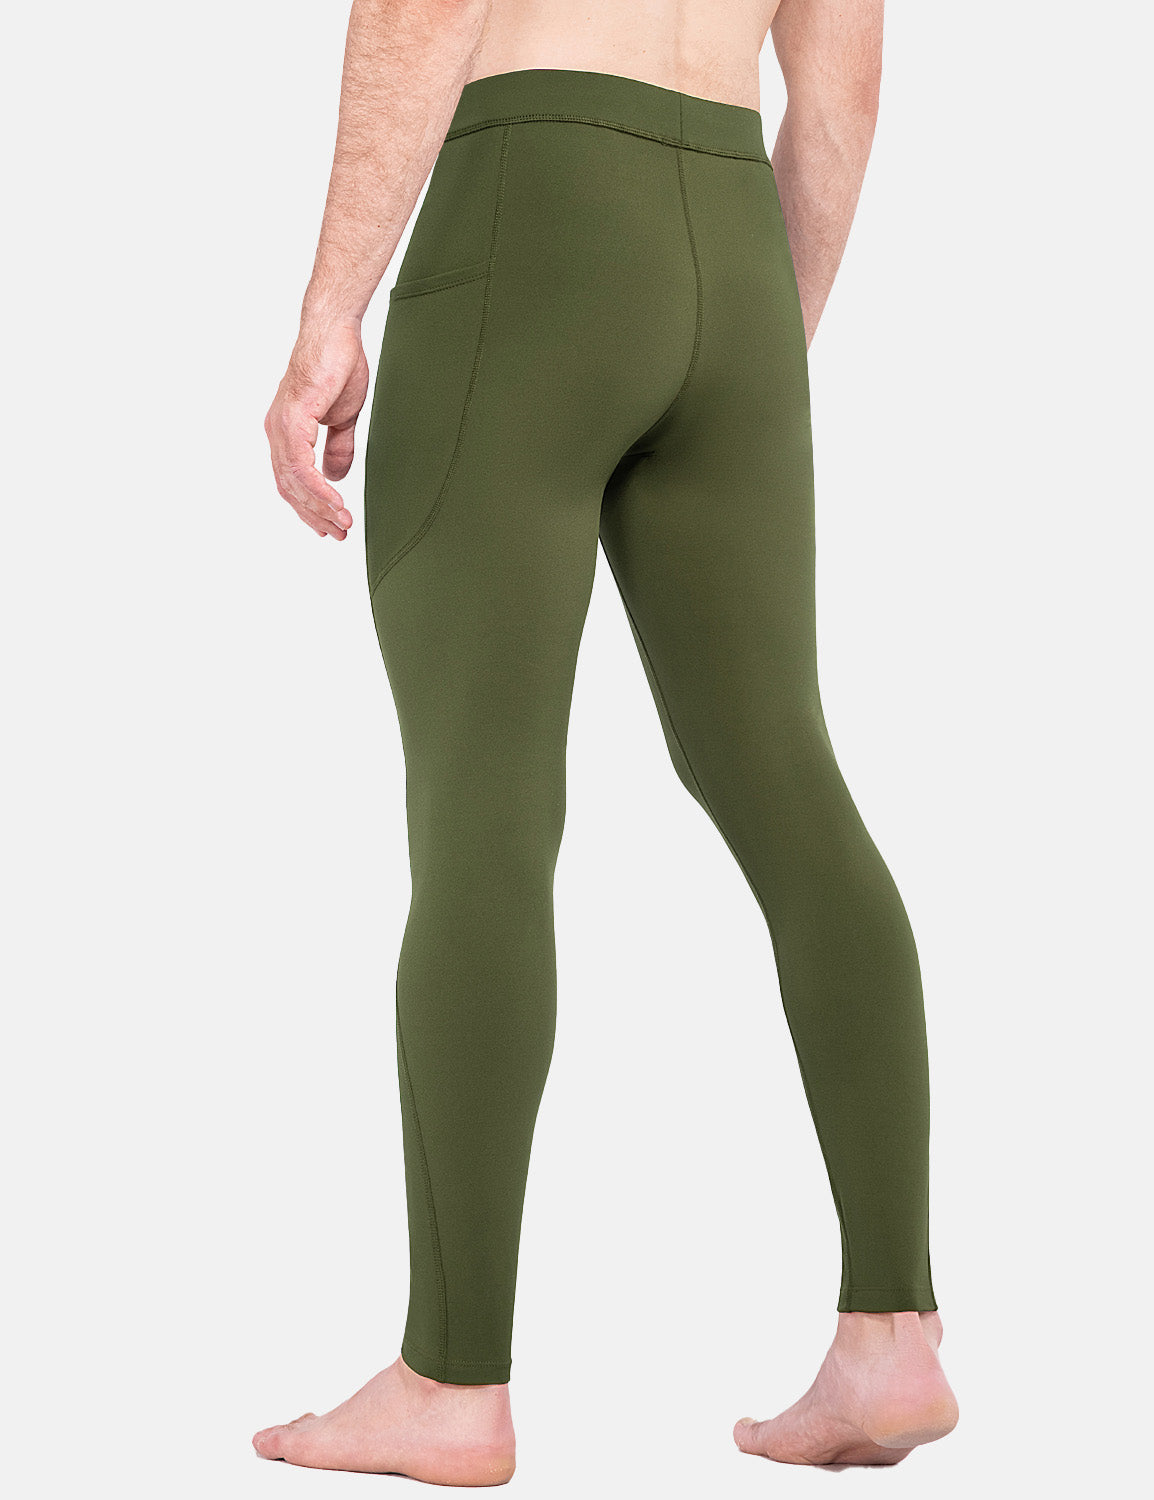 Baleaf Men's Fleece Lined Yoga Tight Pants cbh044 Green Back